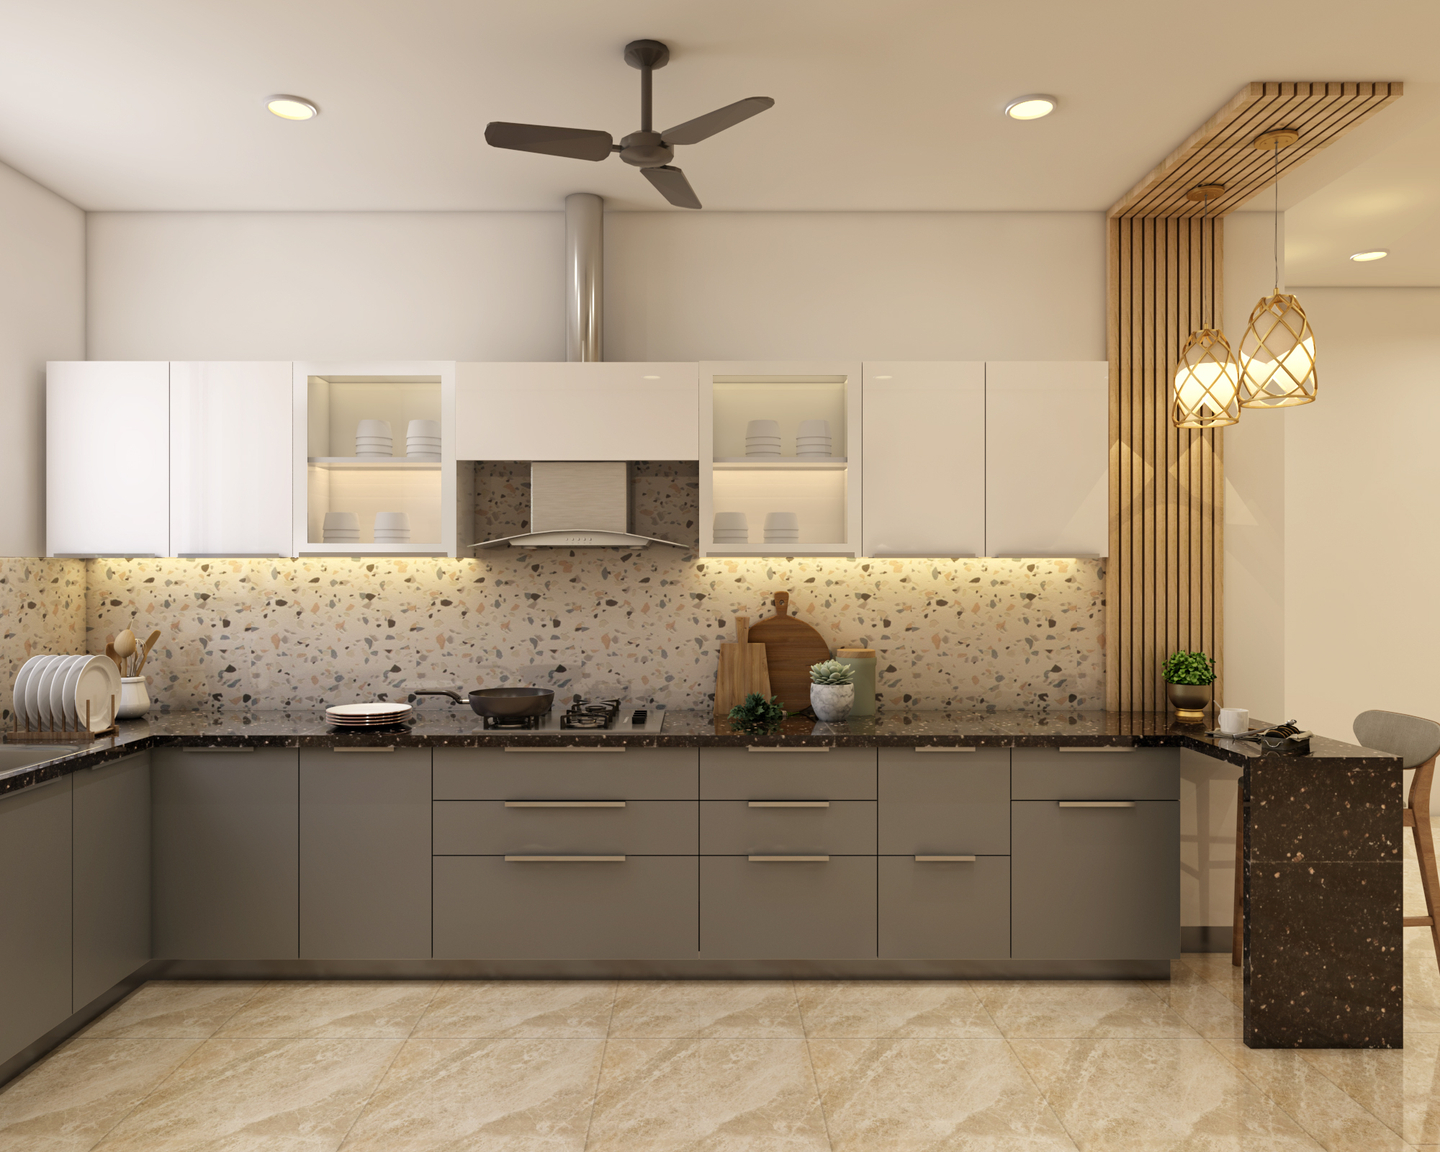 Grey-Themed Kitchen Design - Livspace